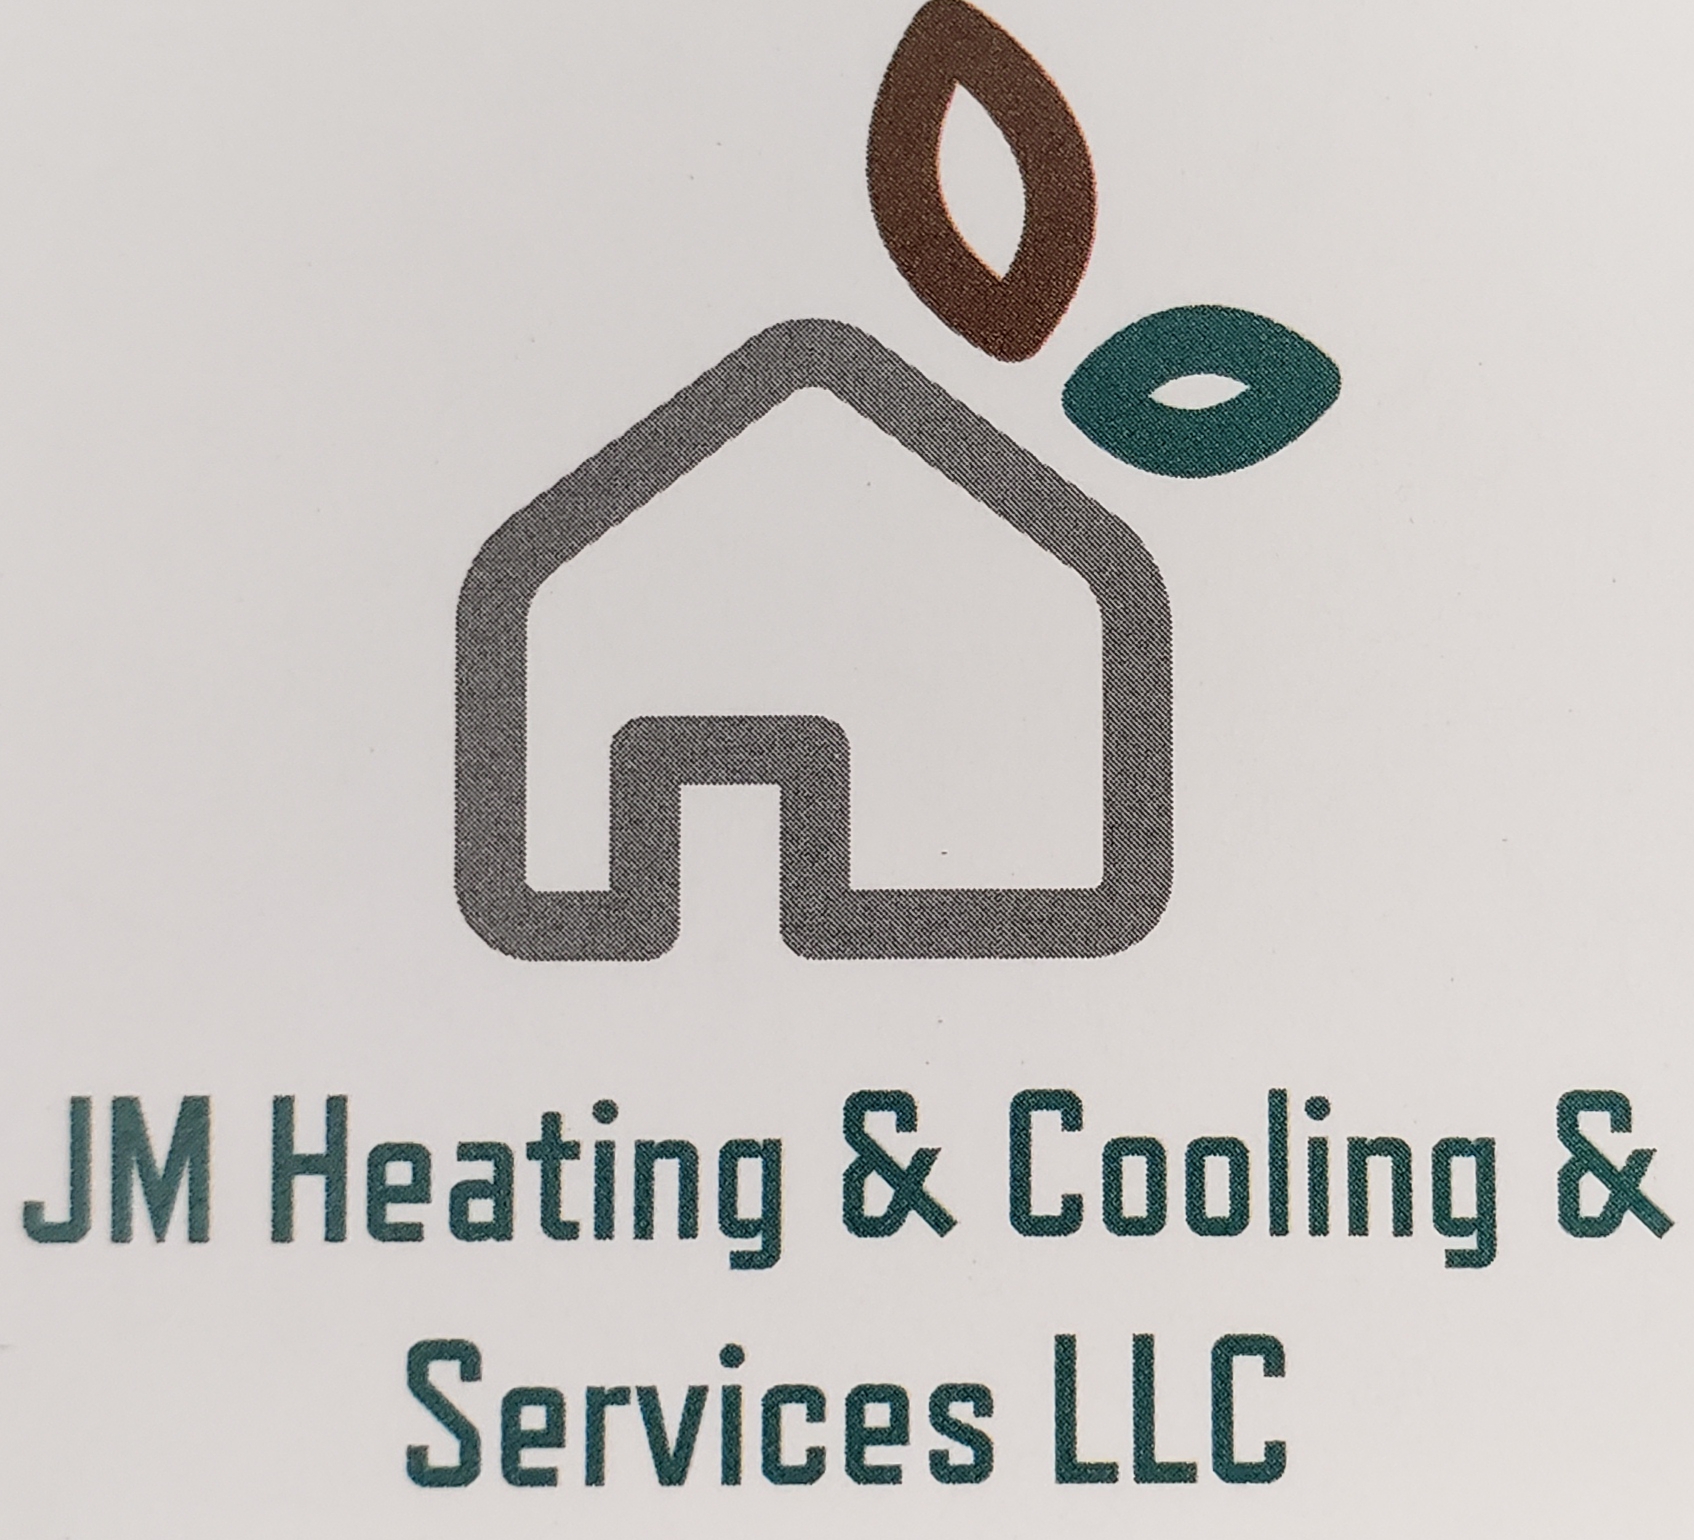 J M Heating & Cooling